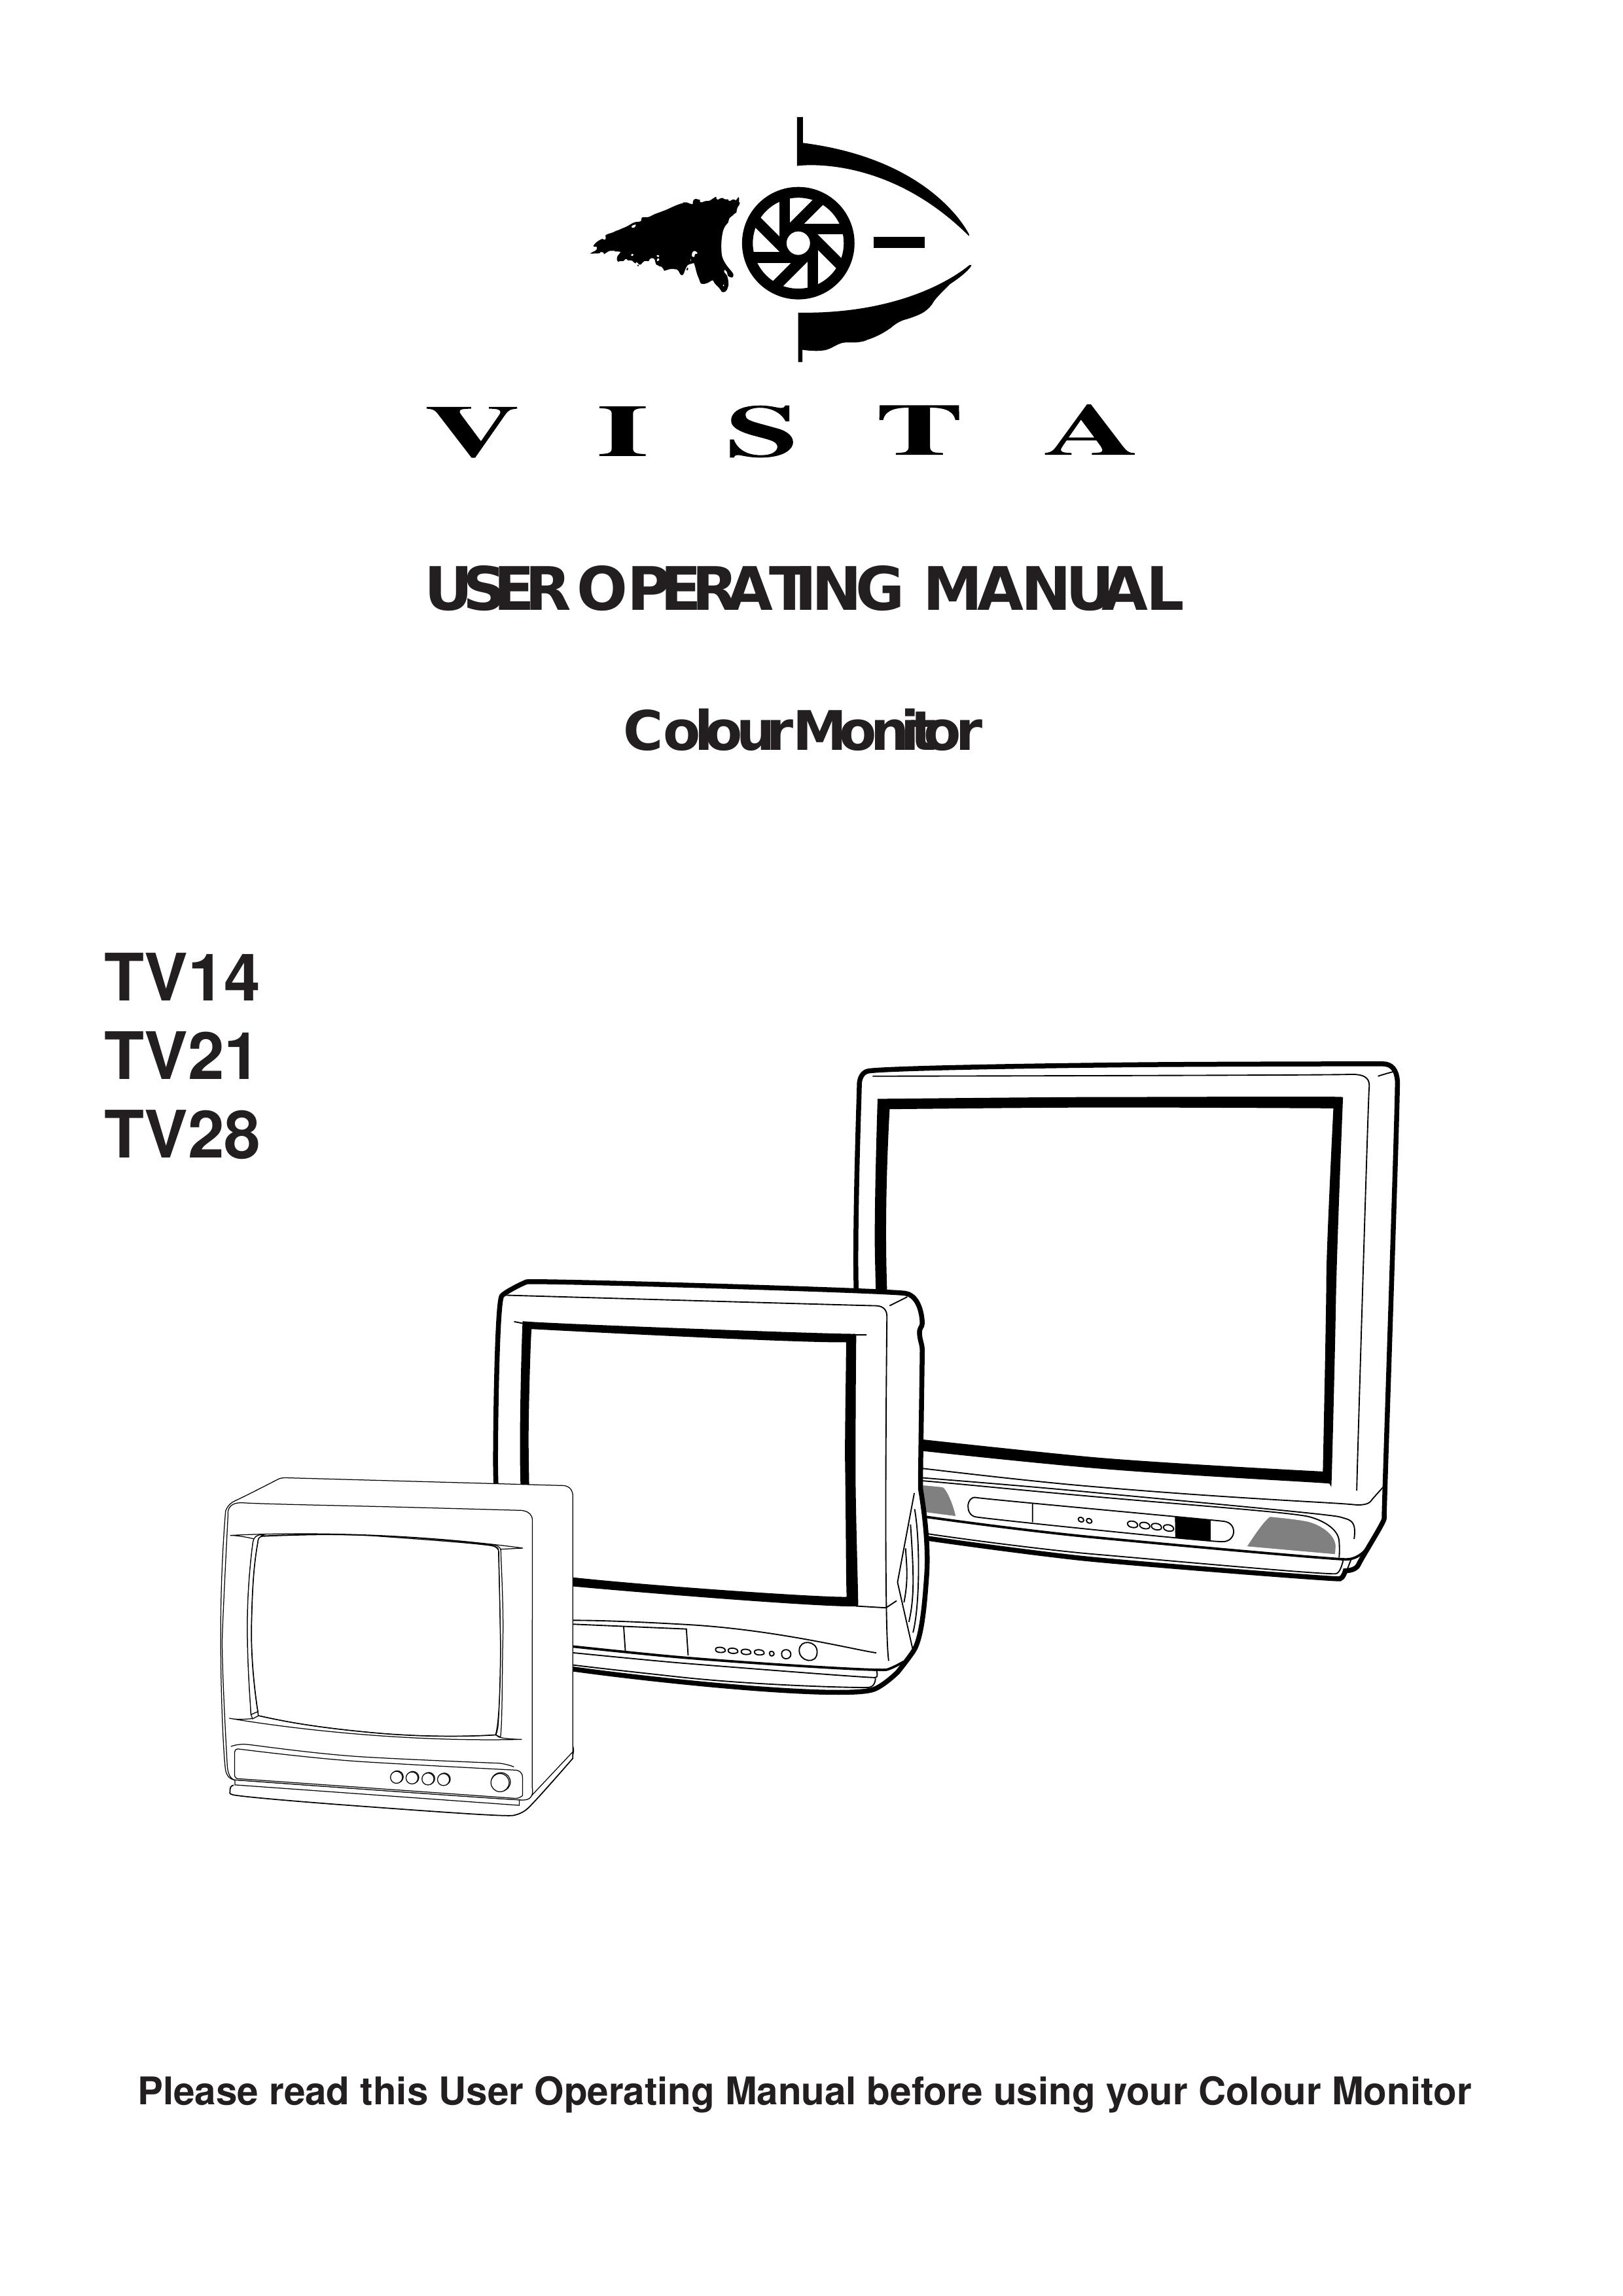 Vista TV28 Blood Glucose Meter User Manual